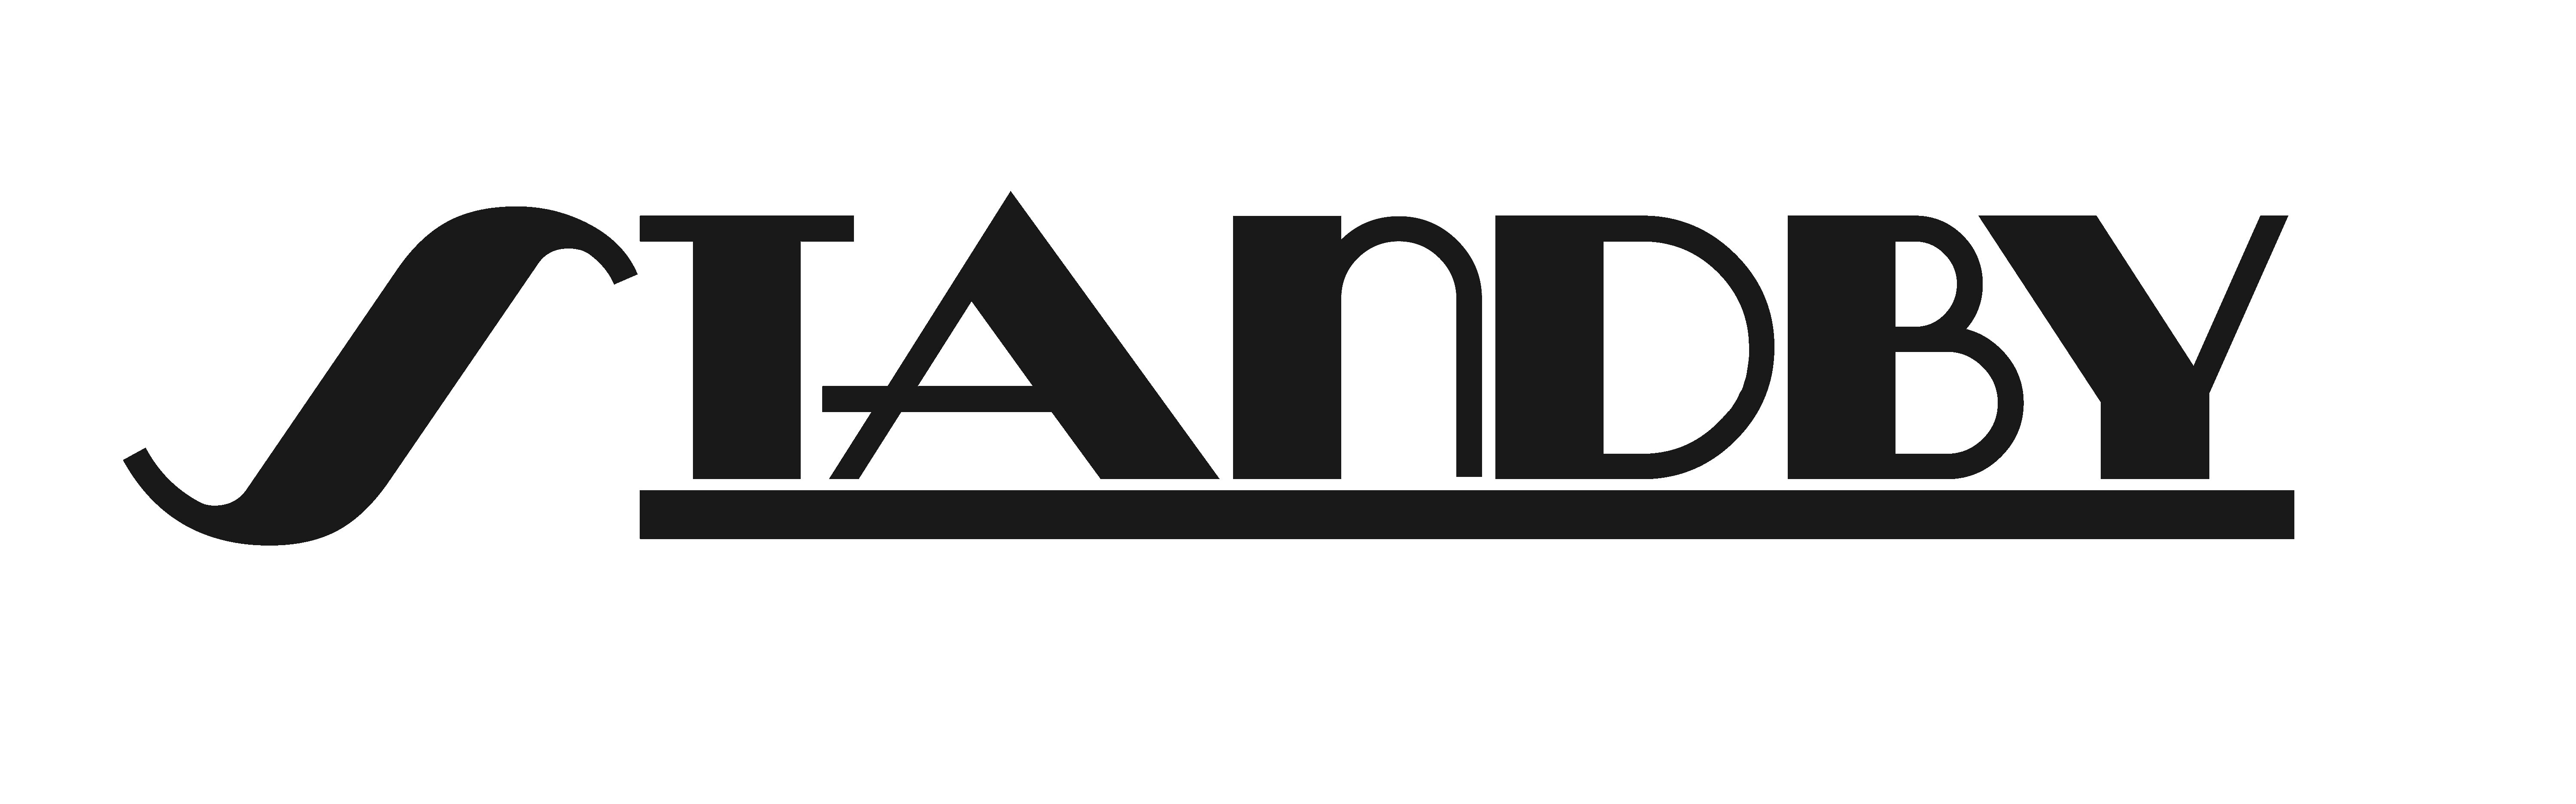 Trademark Logo STANDBY